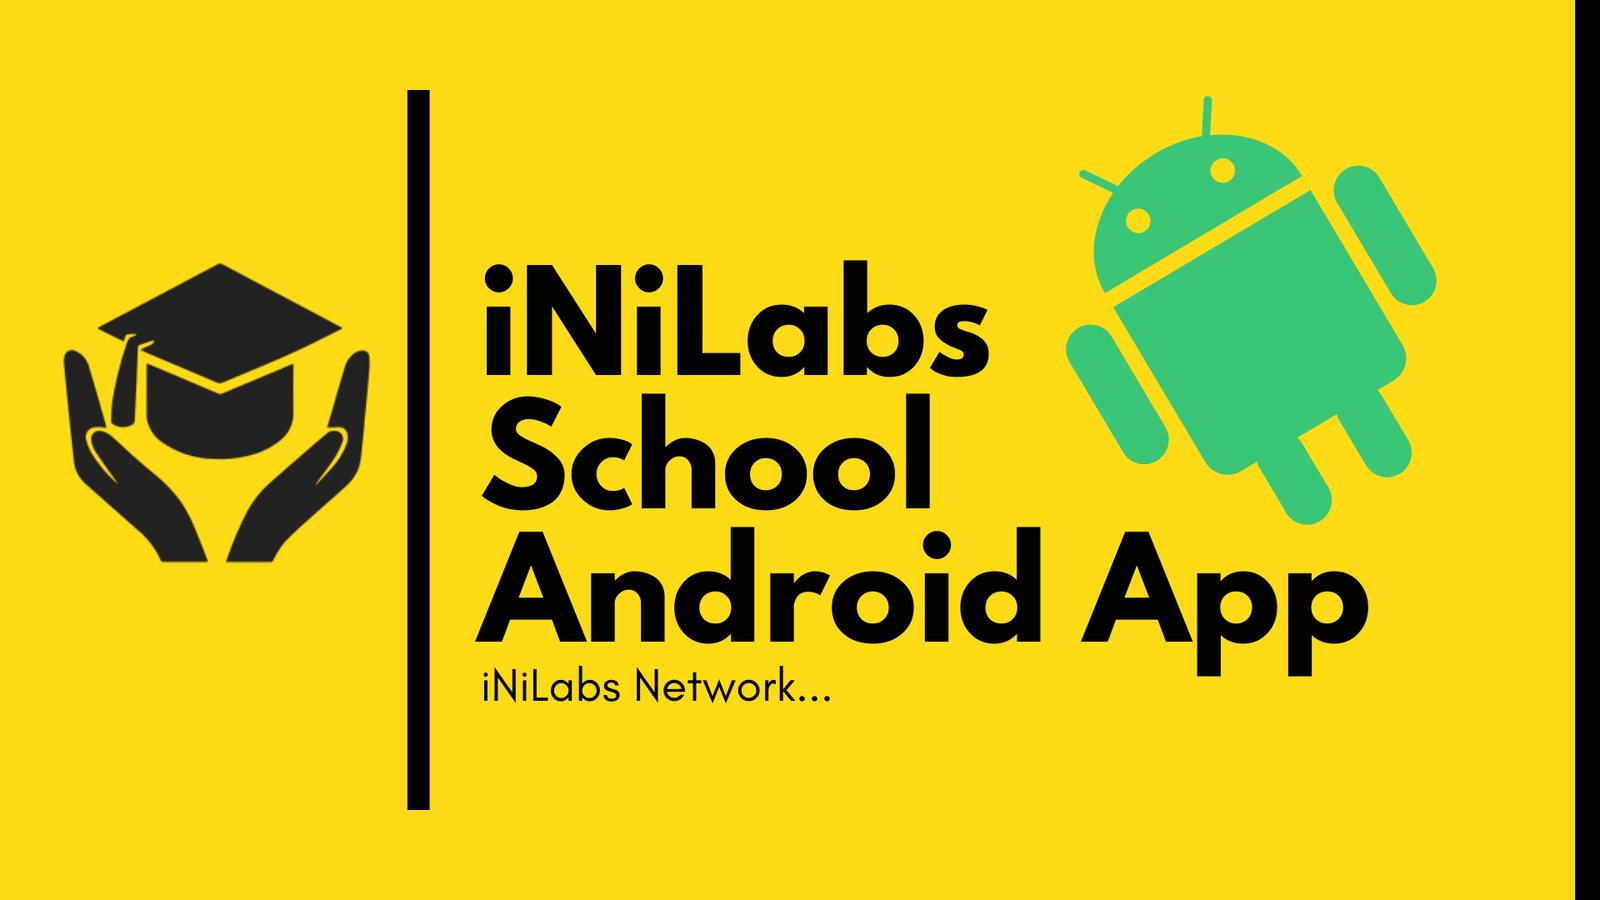 inilabs school app banner